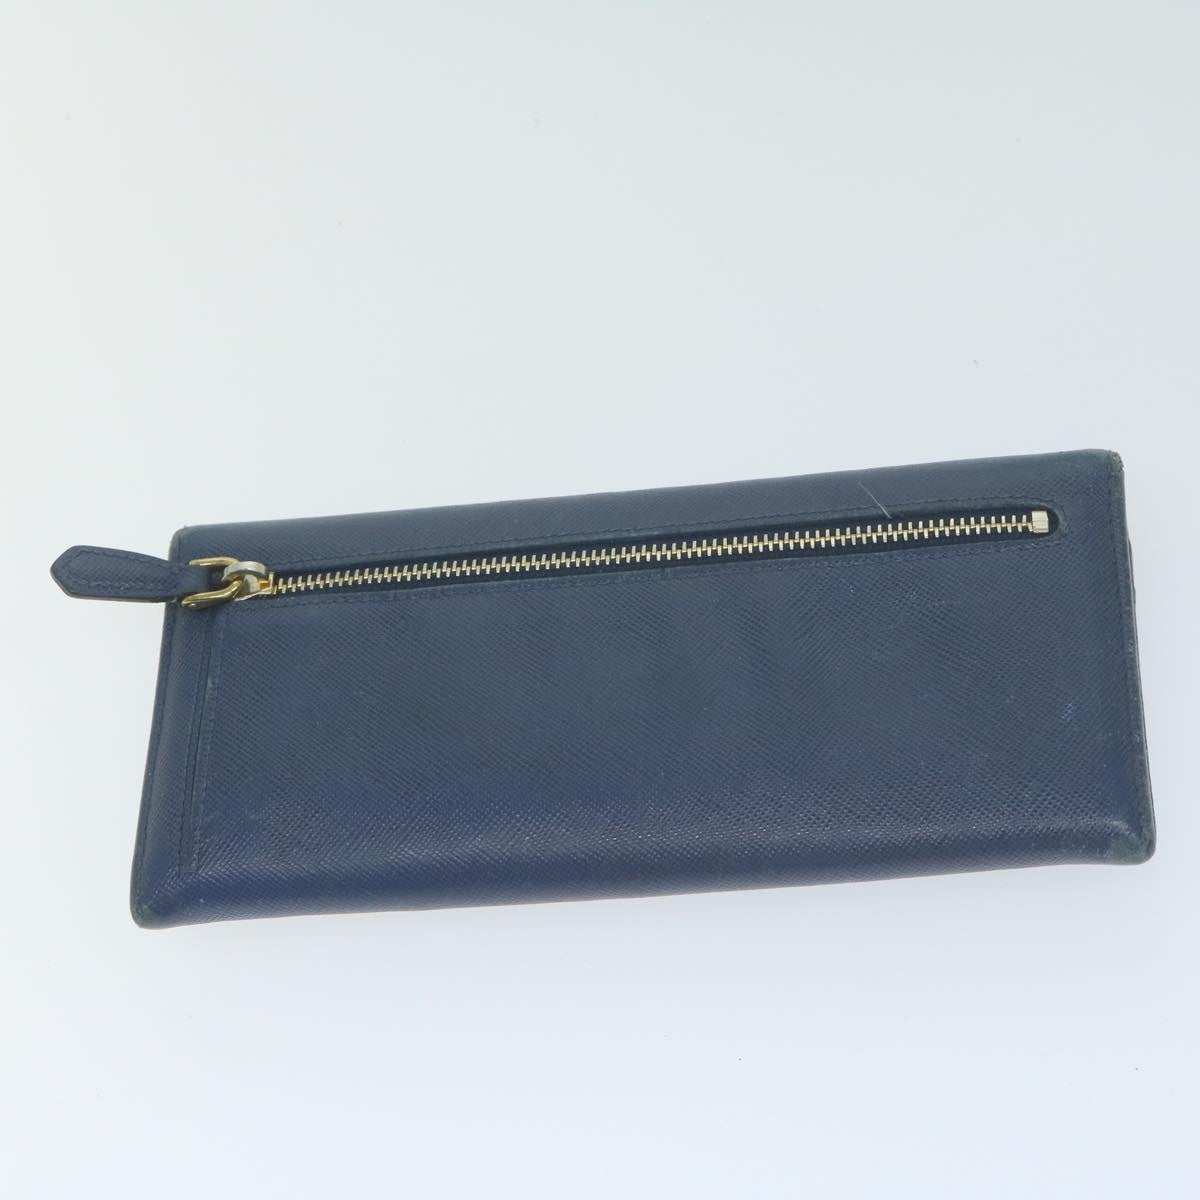 PRADA Wallet Leather nylon 9Set Black Blue Gold red Auth fm3192